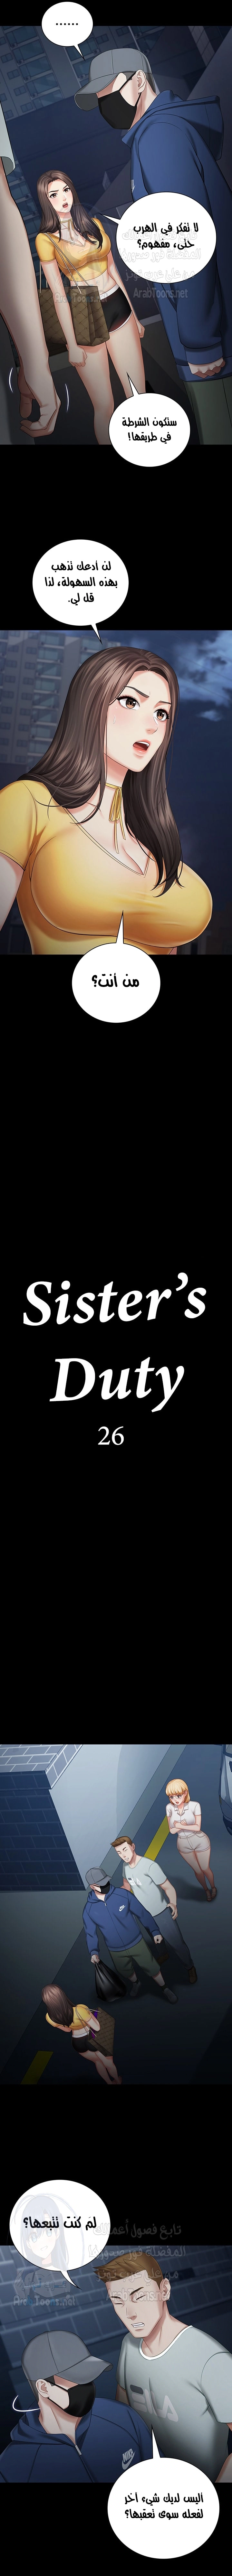 My Sister’s Duty - 26 - 6648199f4f249.webp